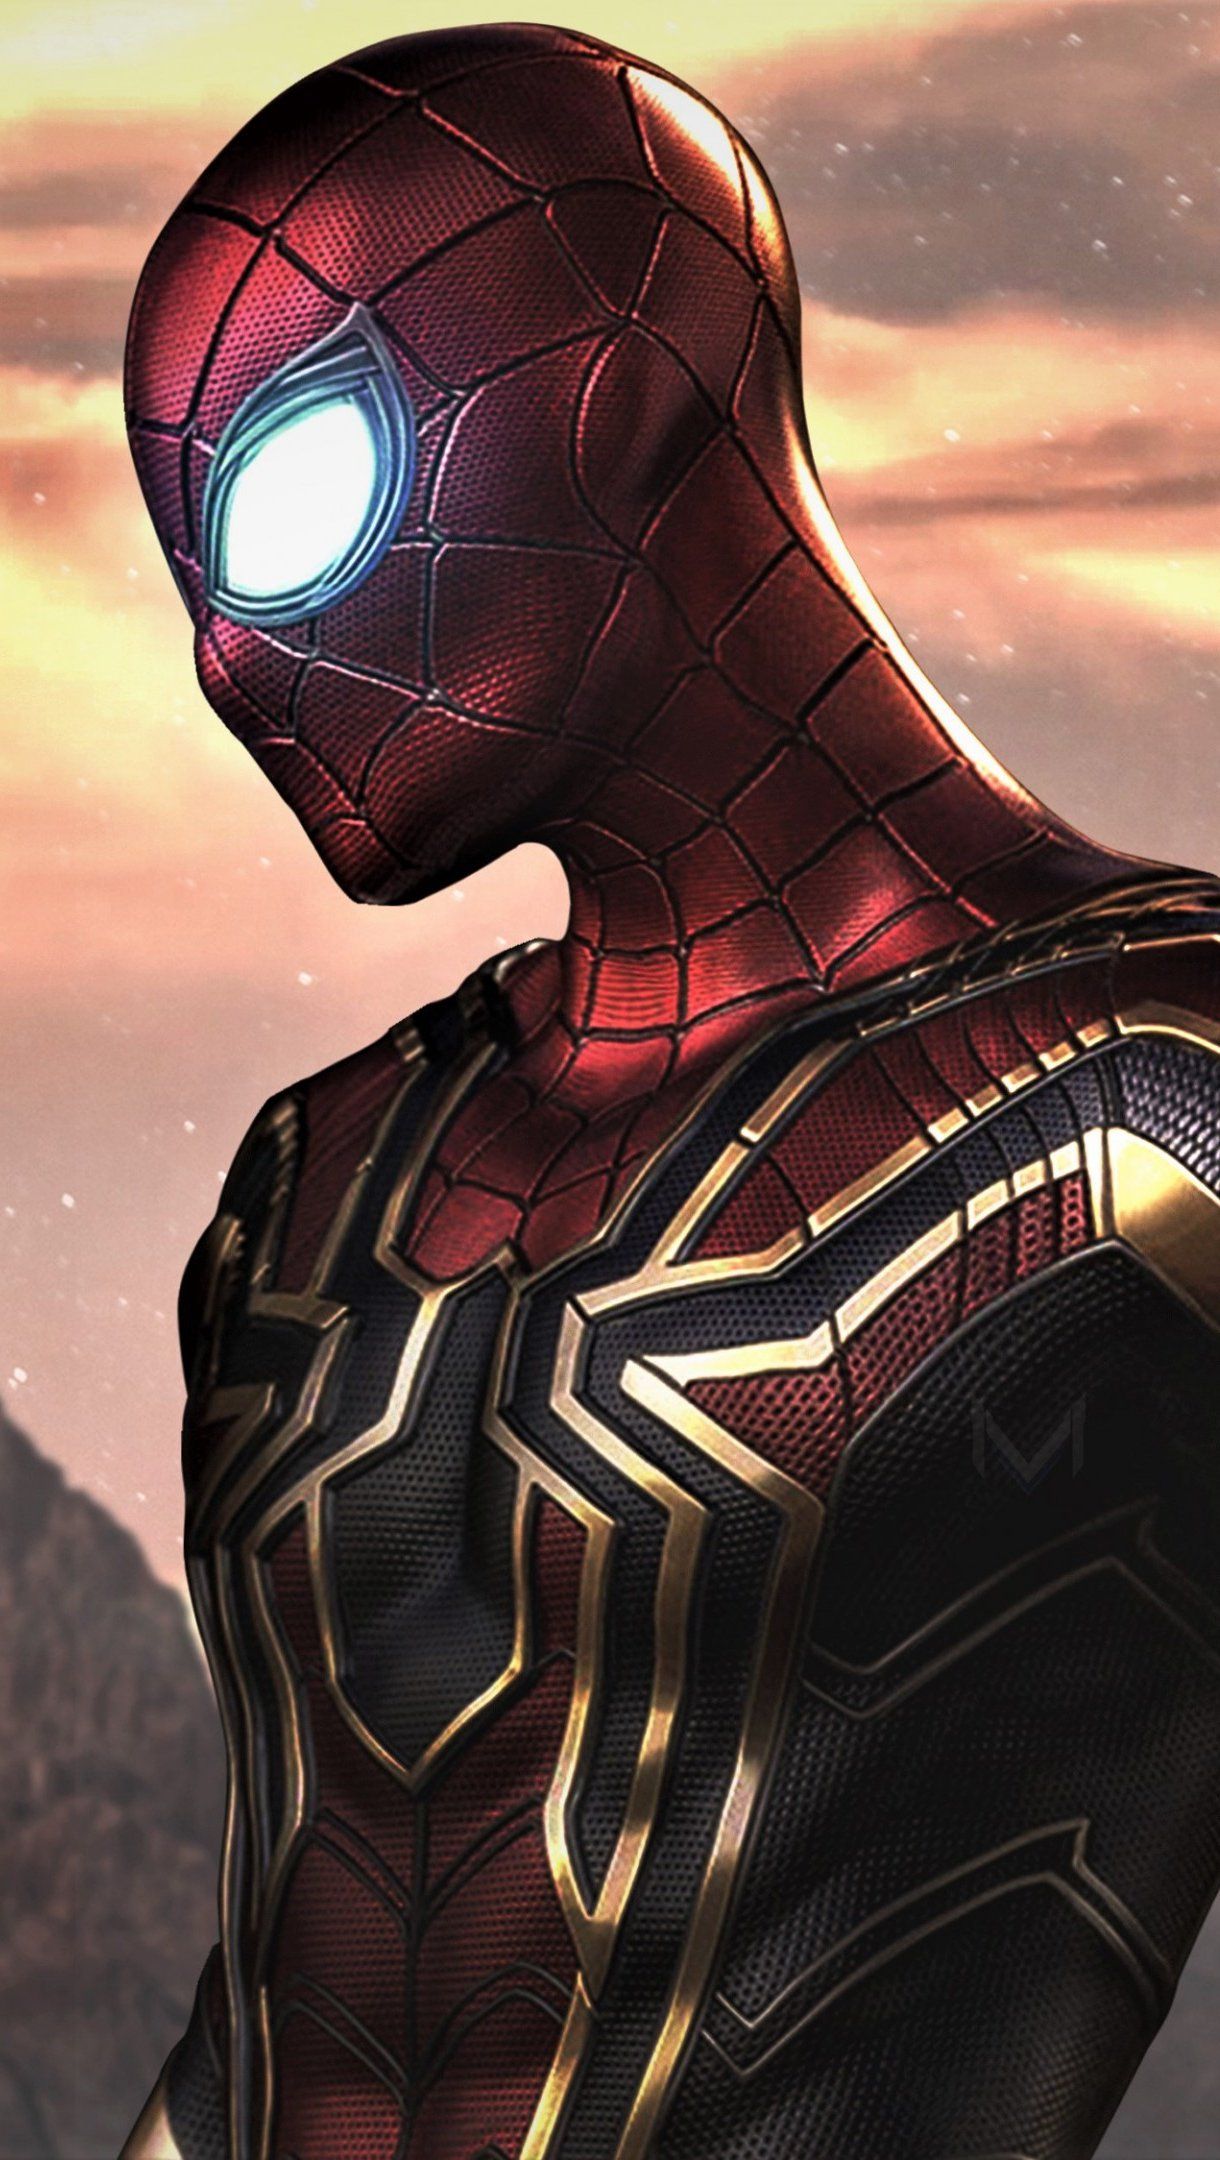 Spider Man: Far From Home Wallpaper 4k Ultra HD